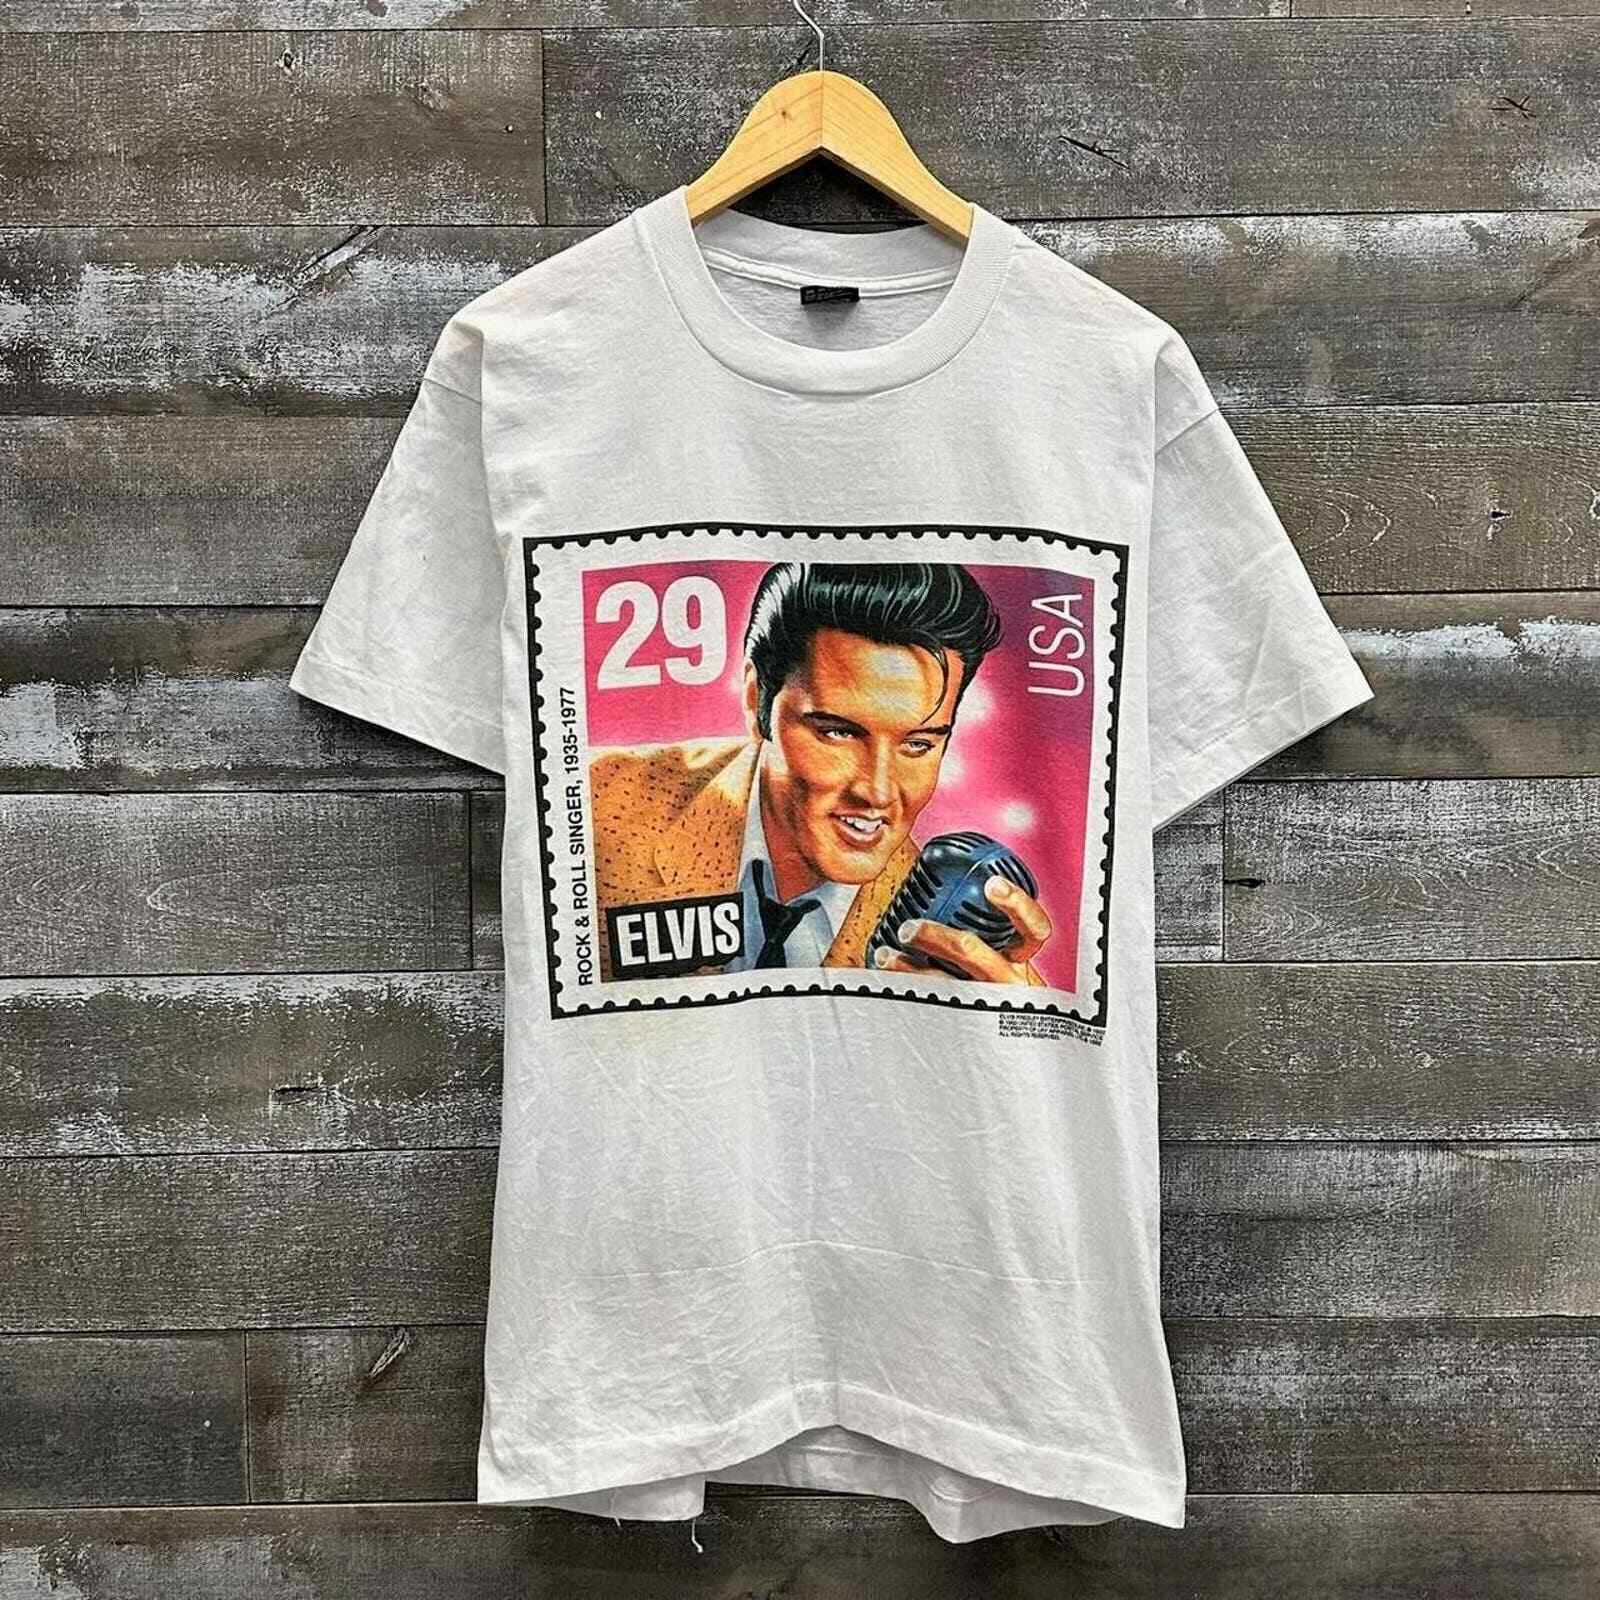 Vintage 1980s Elvis Presley Graphic T-Shirt White Short Sleeve Mens Large